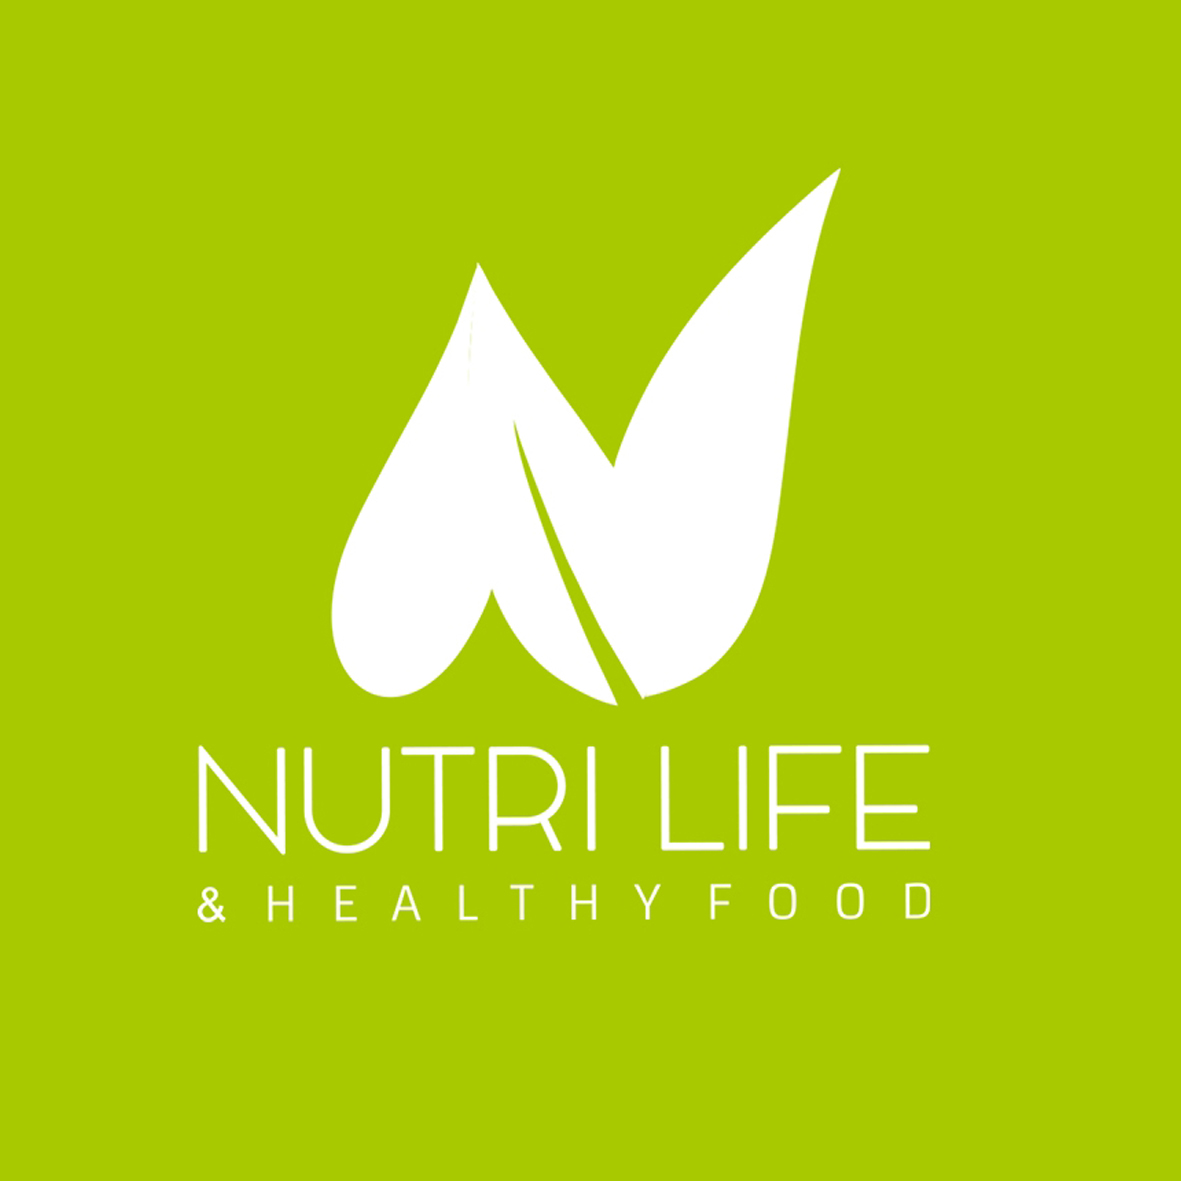 NUTRI LIFE - HEALTHY FOOD